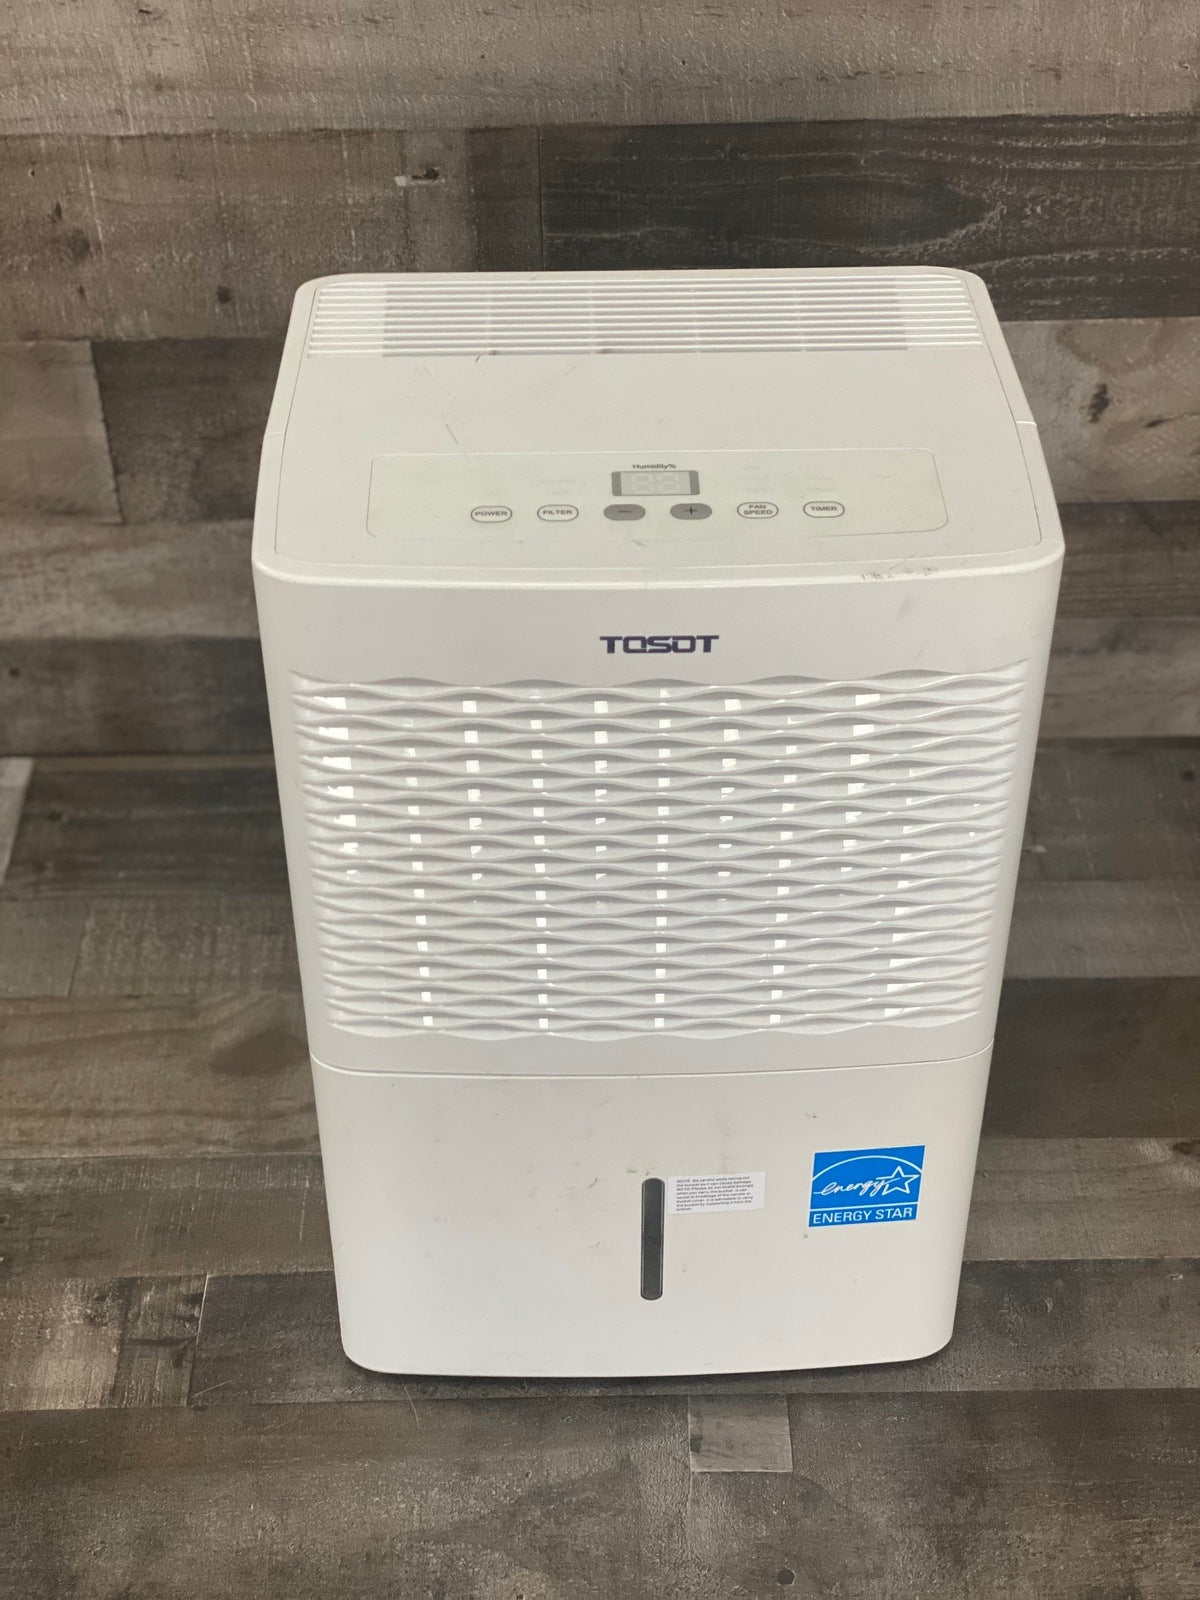 TOSOT 35 Pint 3,000 Sq Ft Dehumidifier Energy Star - for Home, Basement, Bedroom or Bathroom - Super Quiet